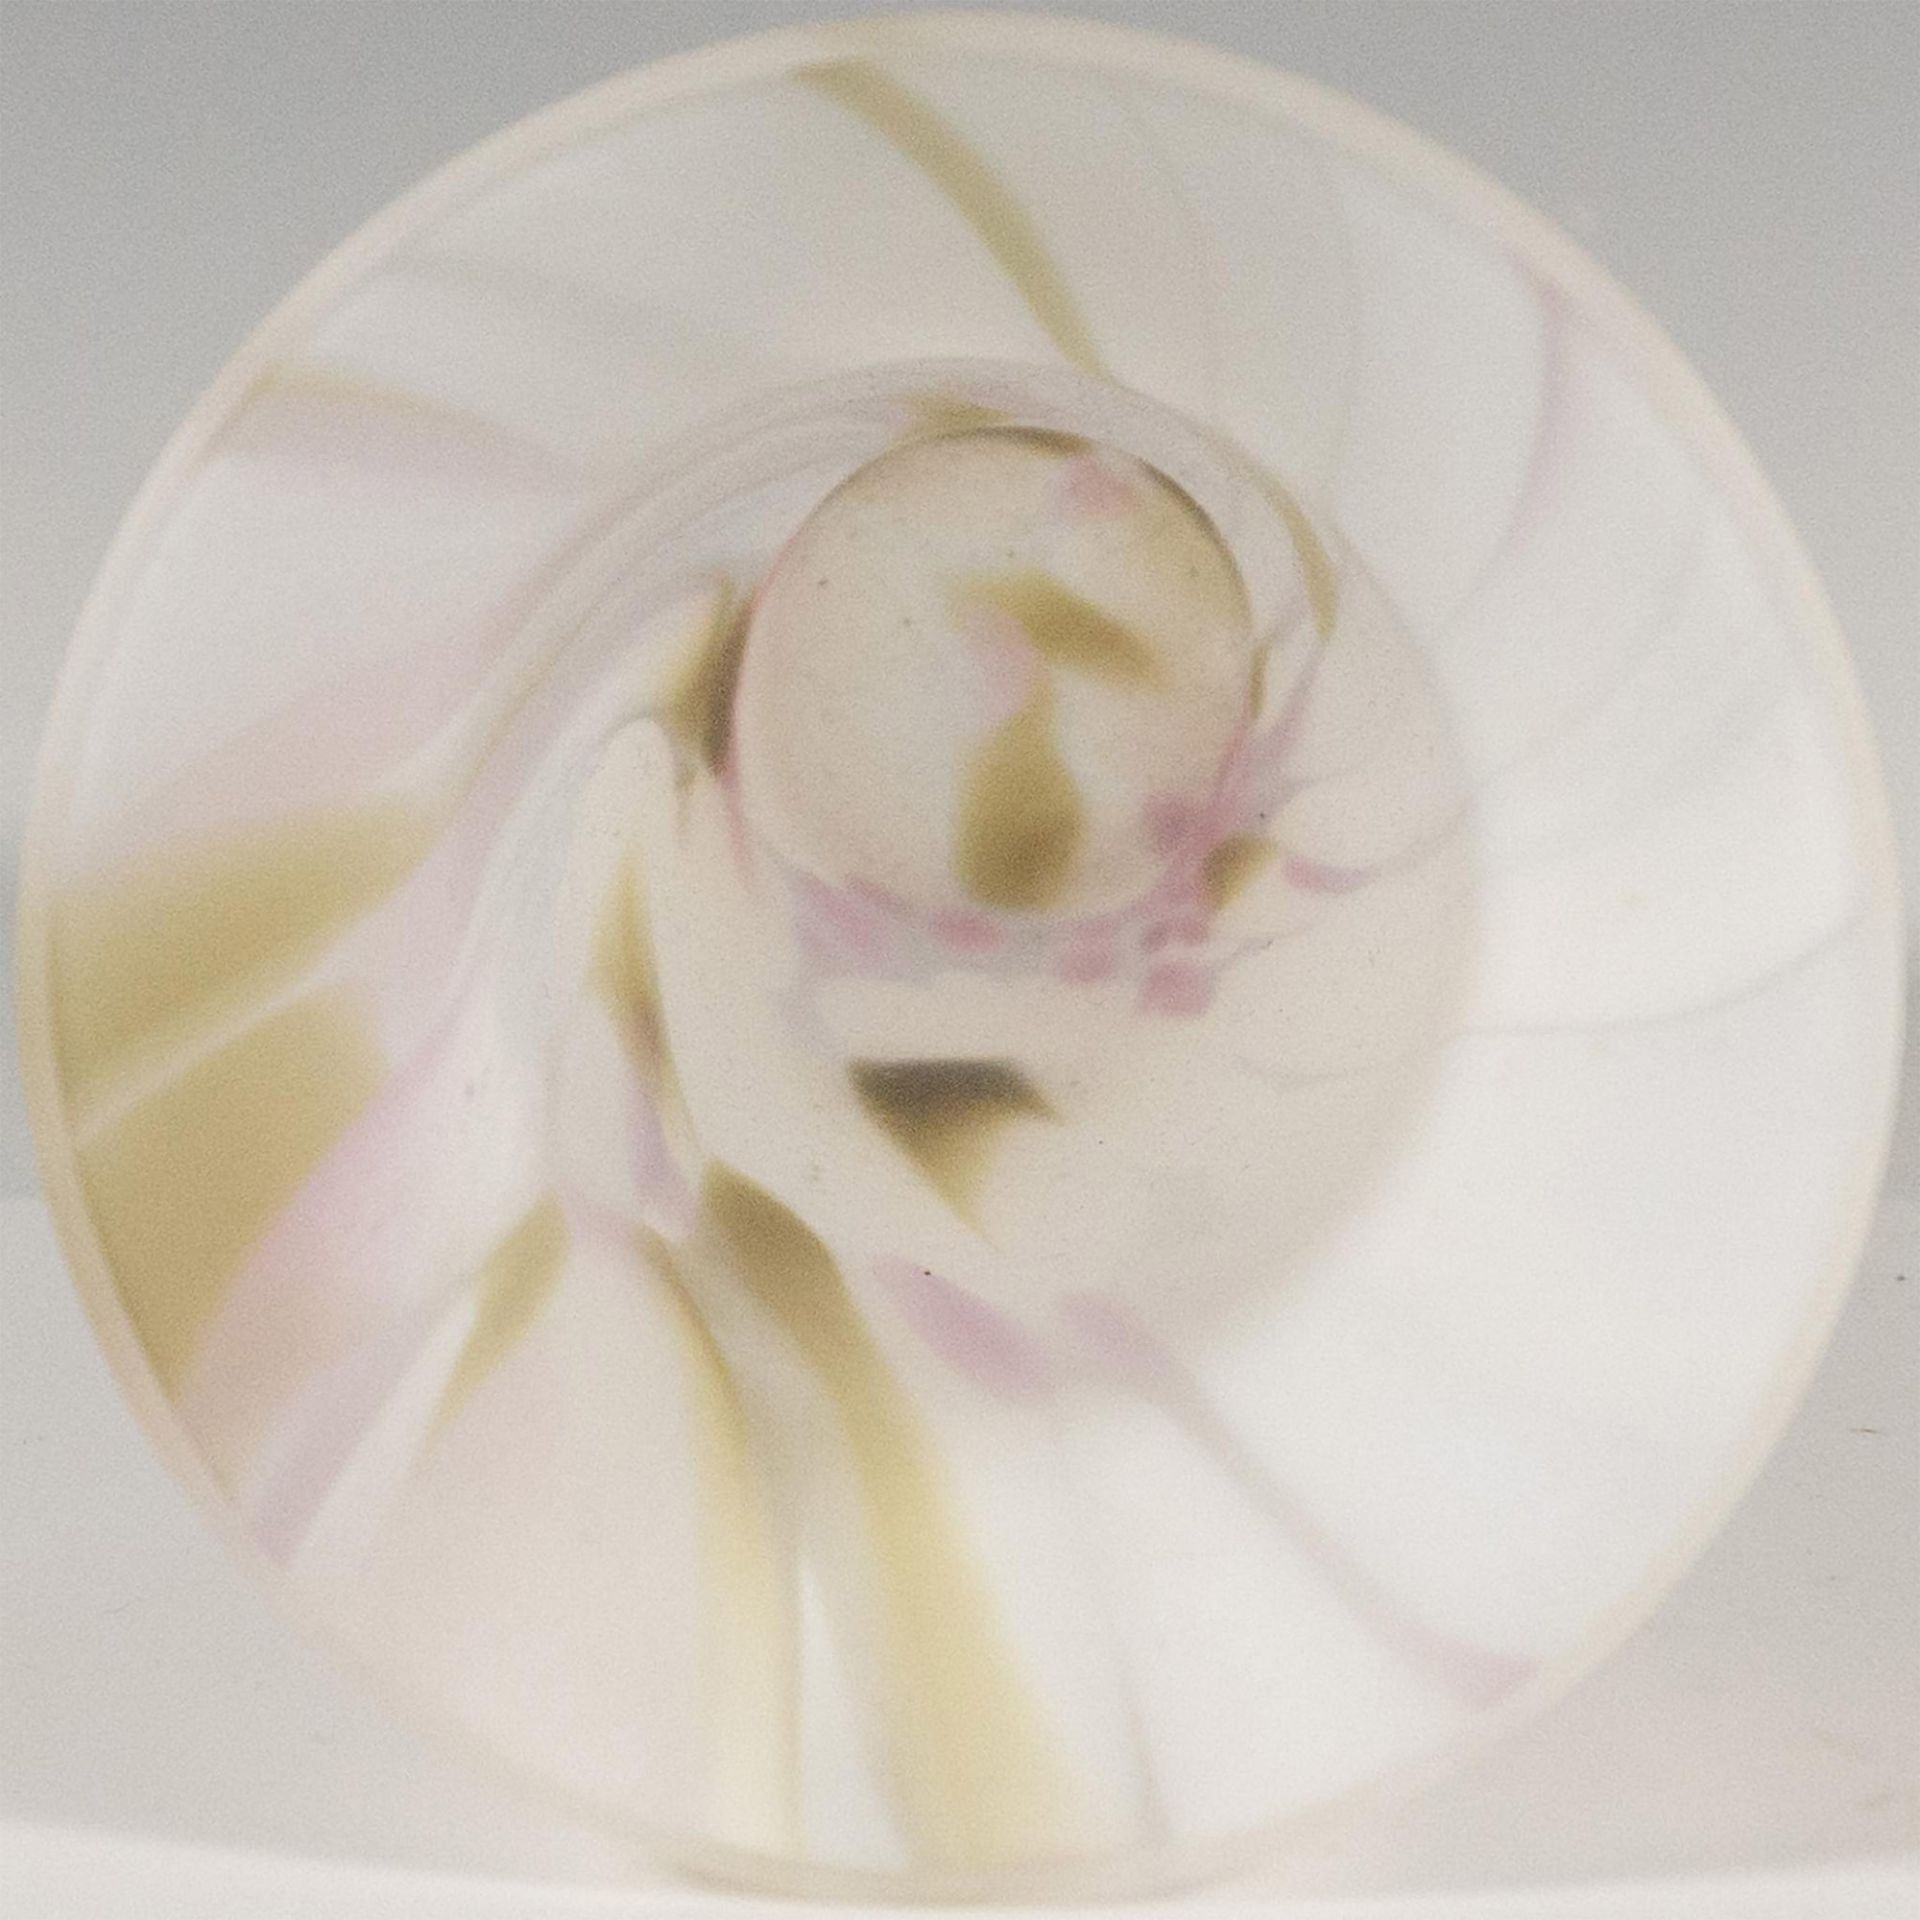 Kosta Boda by Monica Backstrom Glass Vase, Zelda - Image 4 of 4